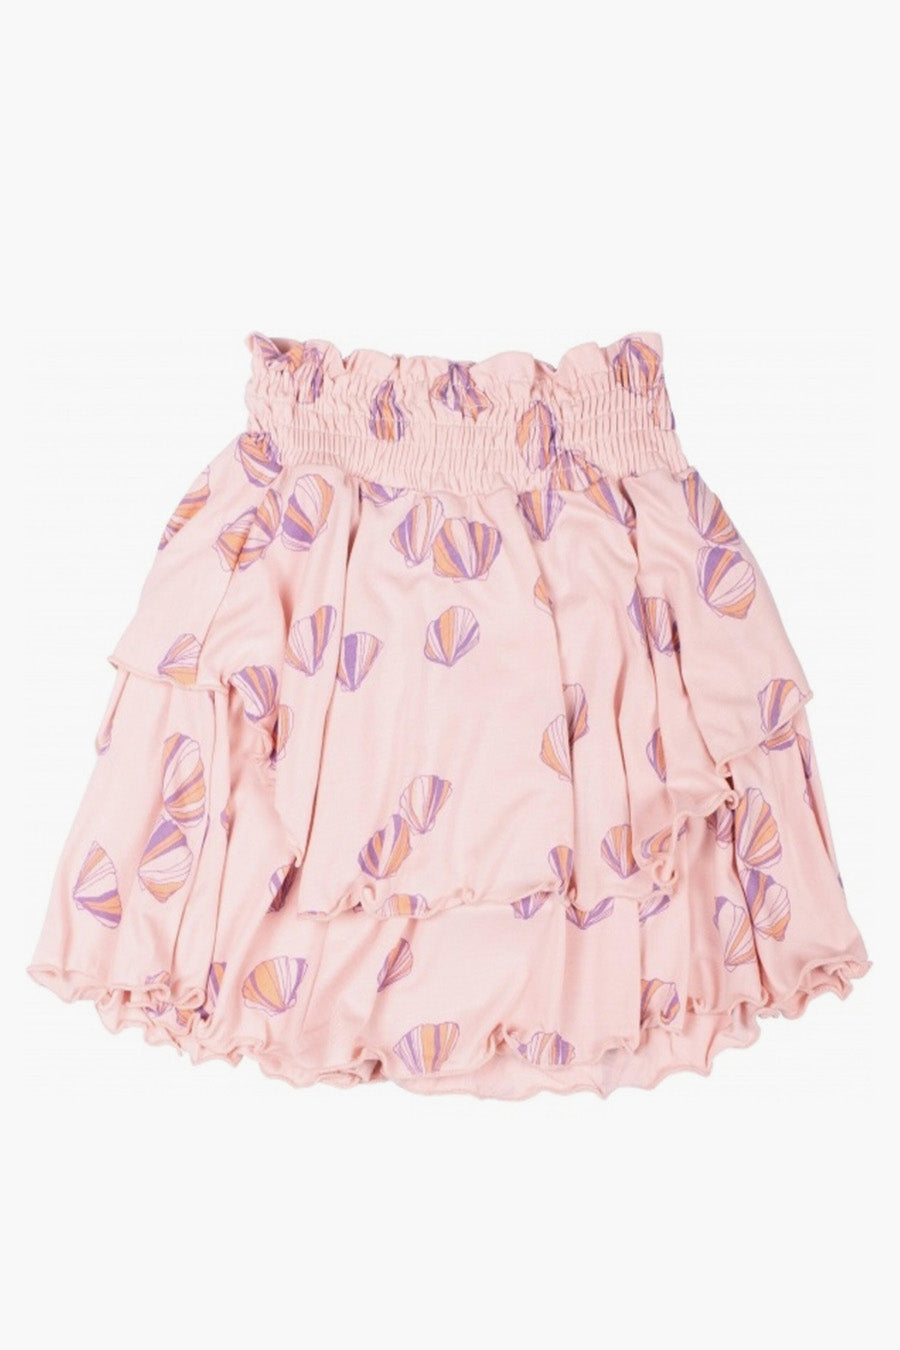 Girls Soft Gallery Lulu Seashell Skirt (Size 12 left) – Mini Ruby